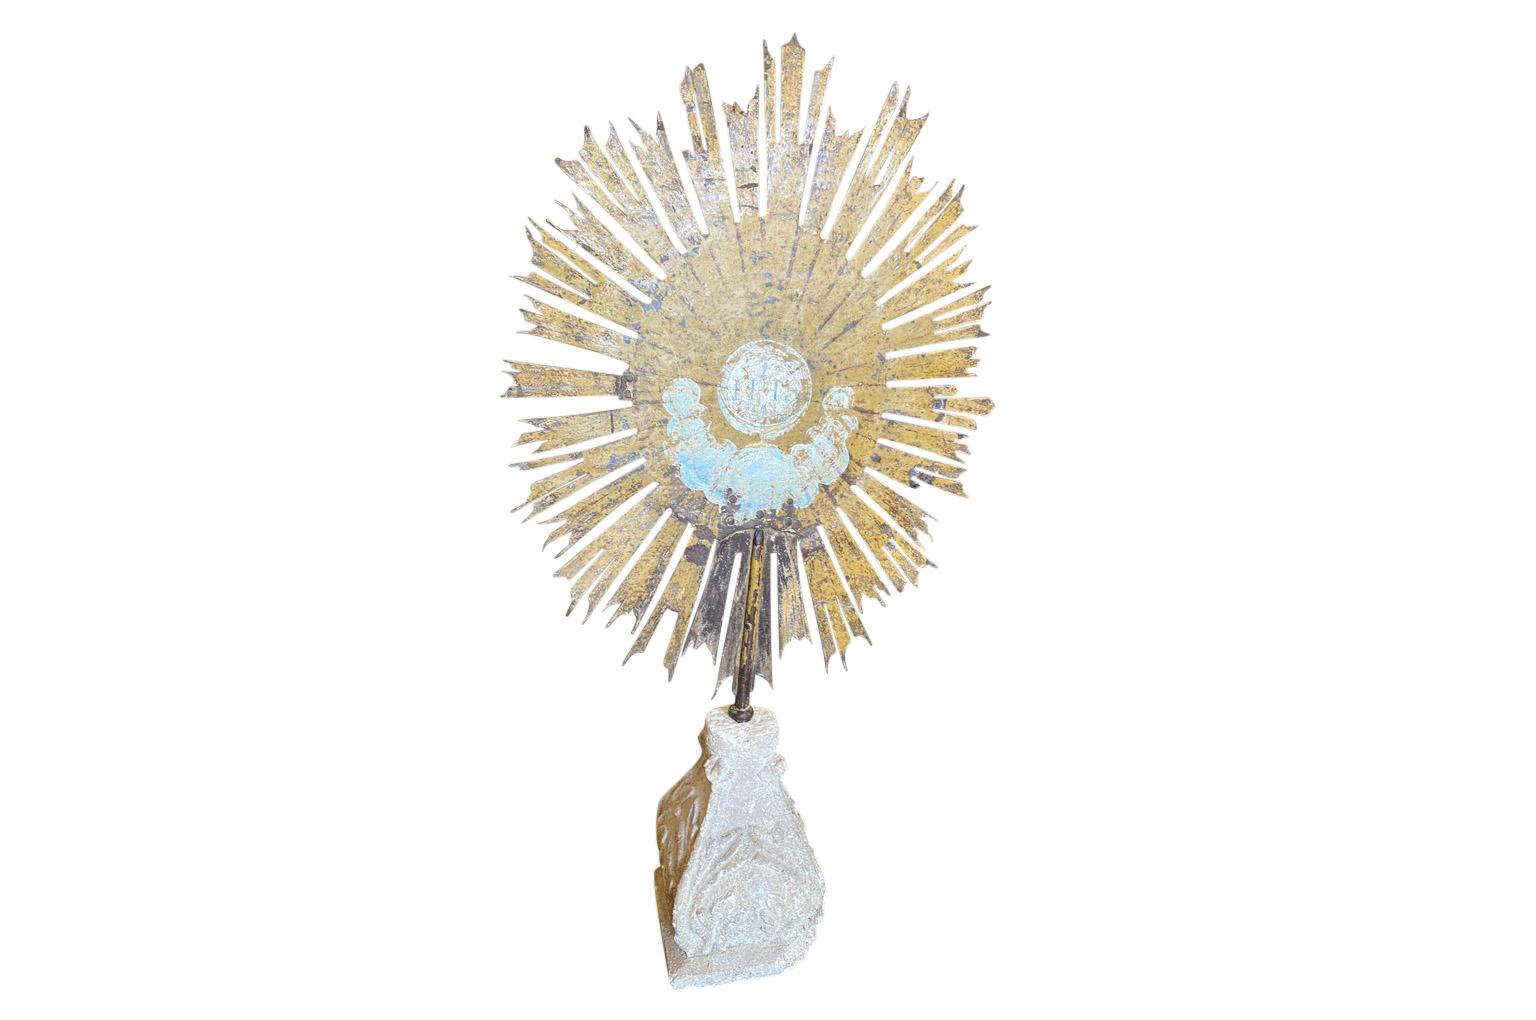 18th Century Italian Sunburst Religious Artifact In Good Condition For Sale In Atlanta, GA